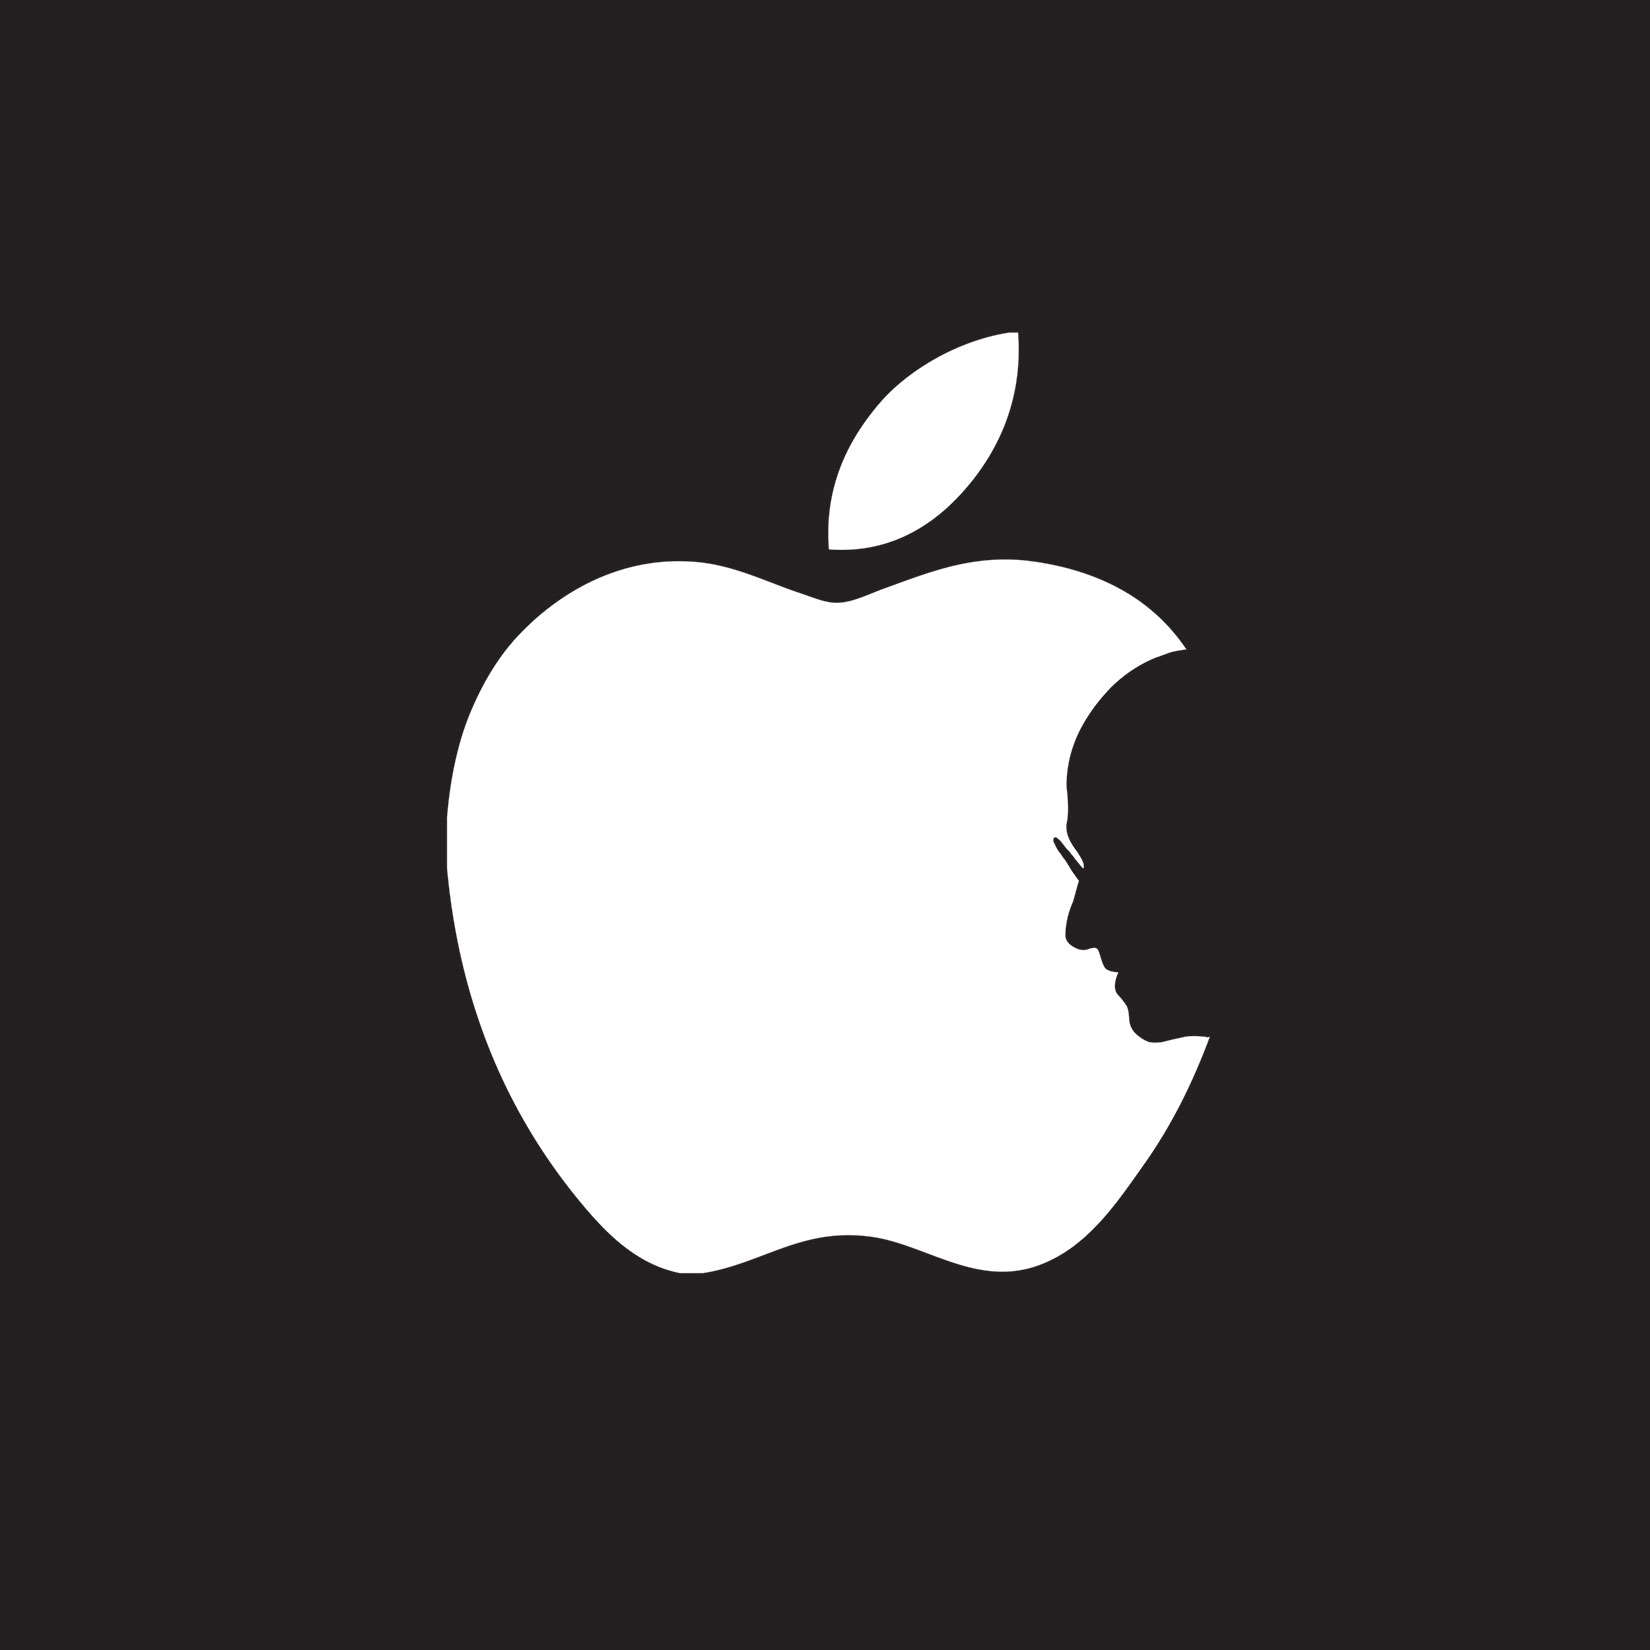 iPhone Web Logo - How a viral Steve Jobs tribute sparked one designer's career